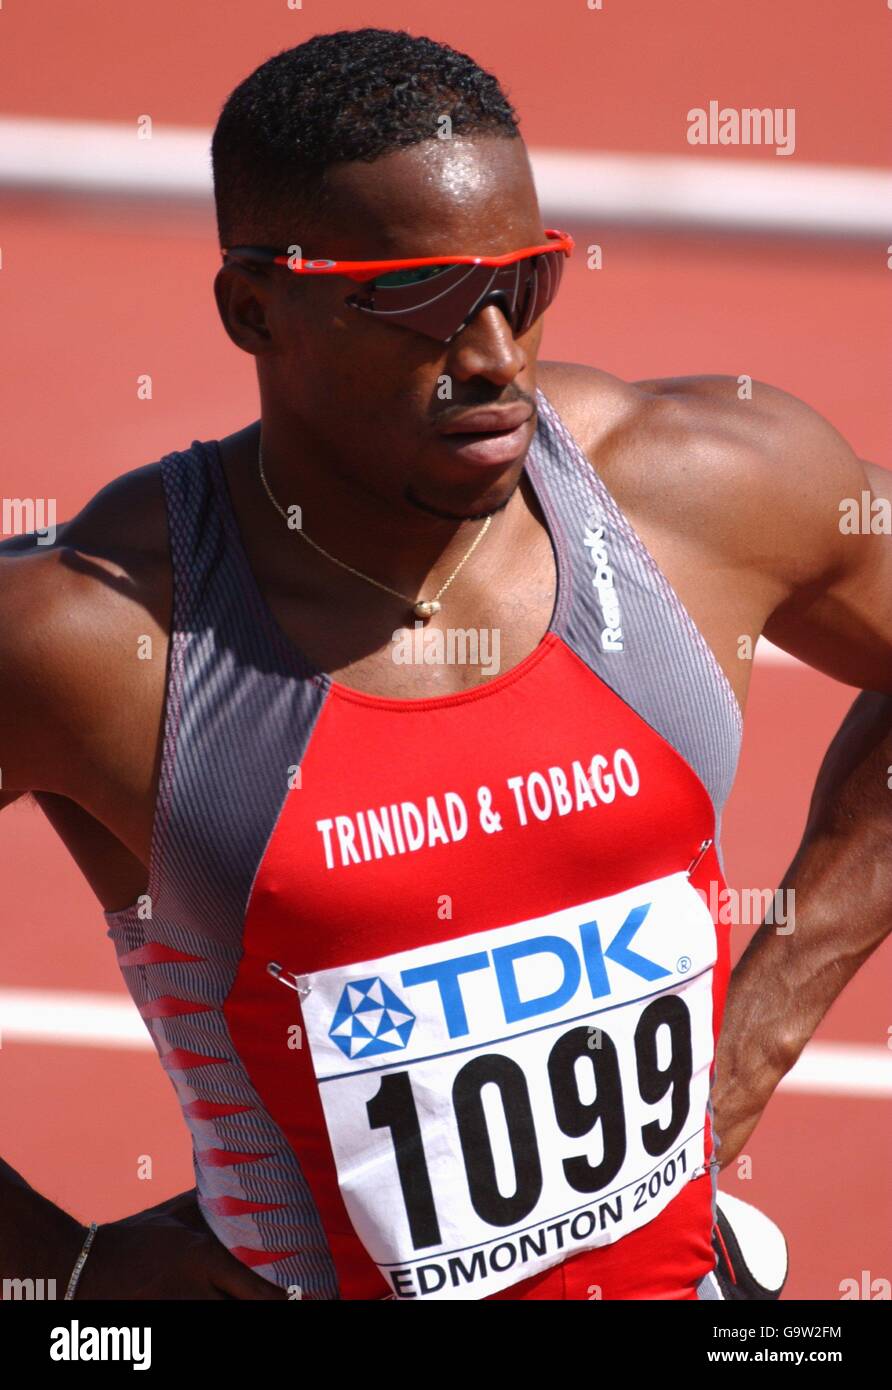 Athletics Iaaf World Championships Edmonton Trinidad And Tobagos